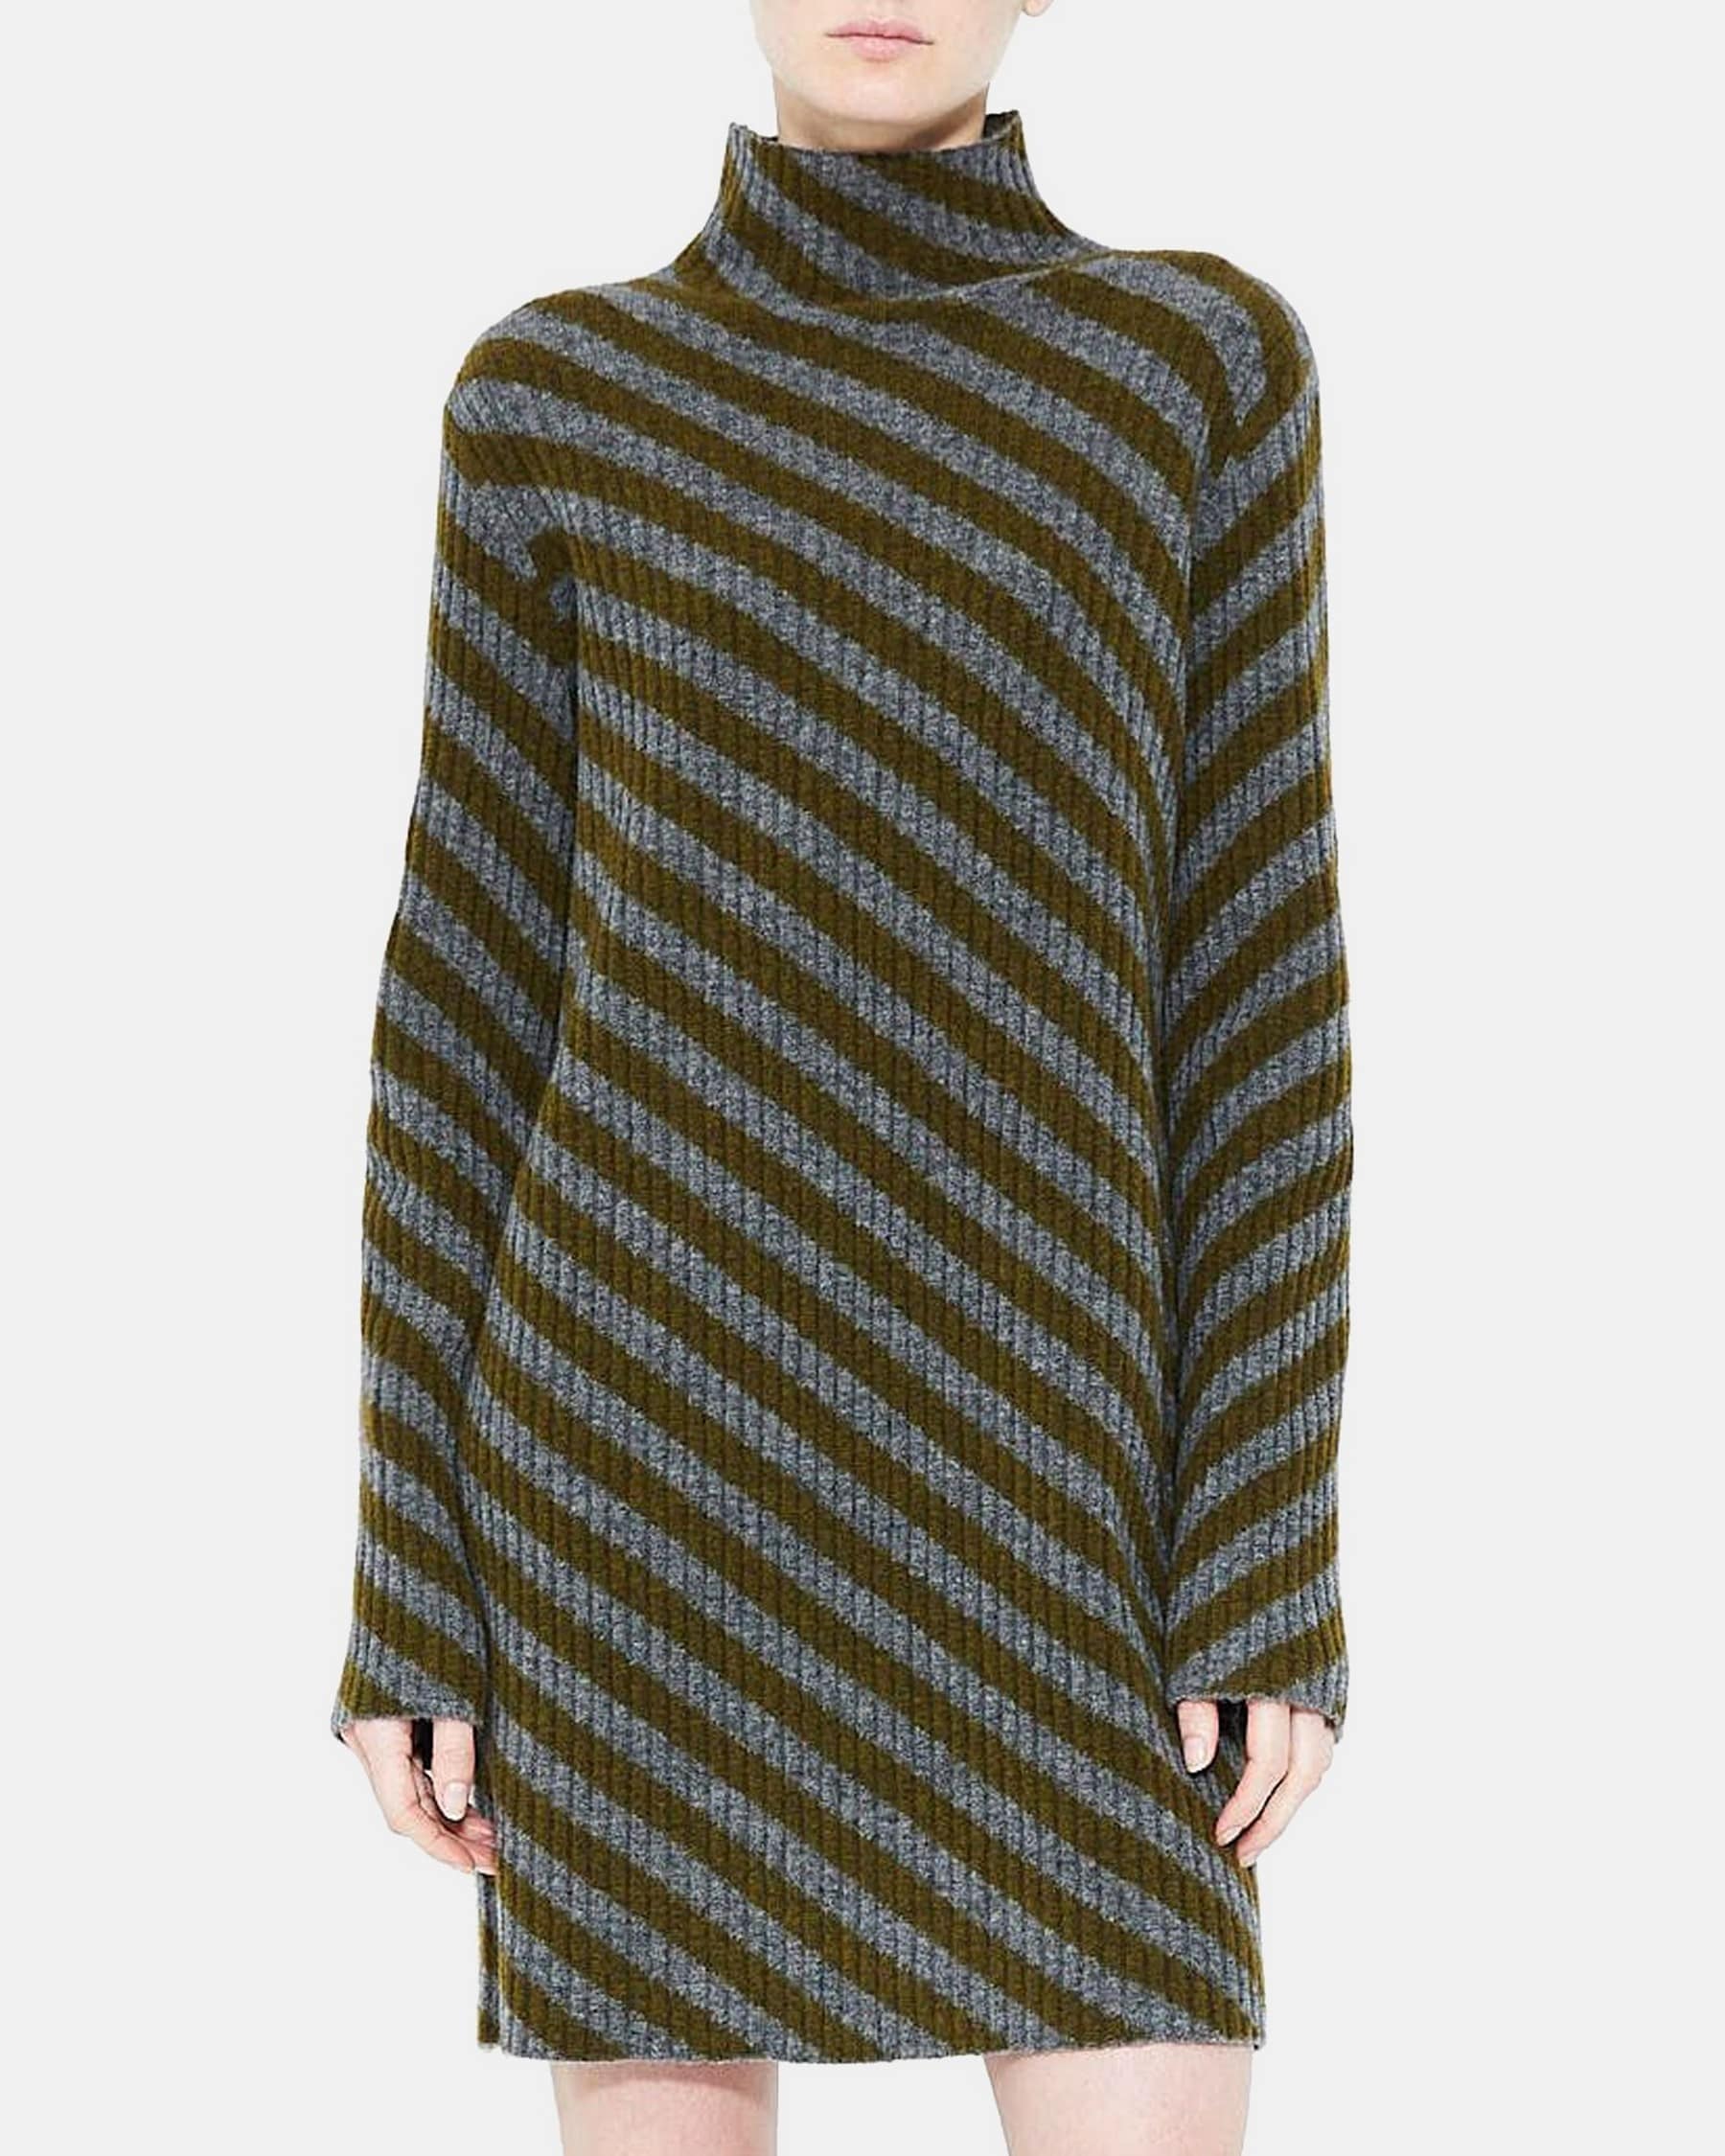 Theory Turtleneck Dress in Striped Wool Blend